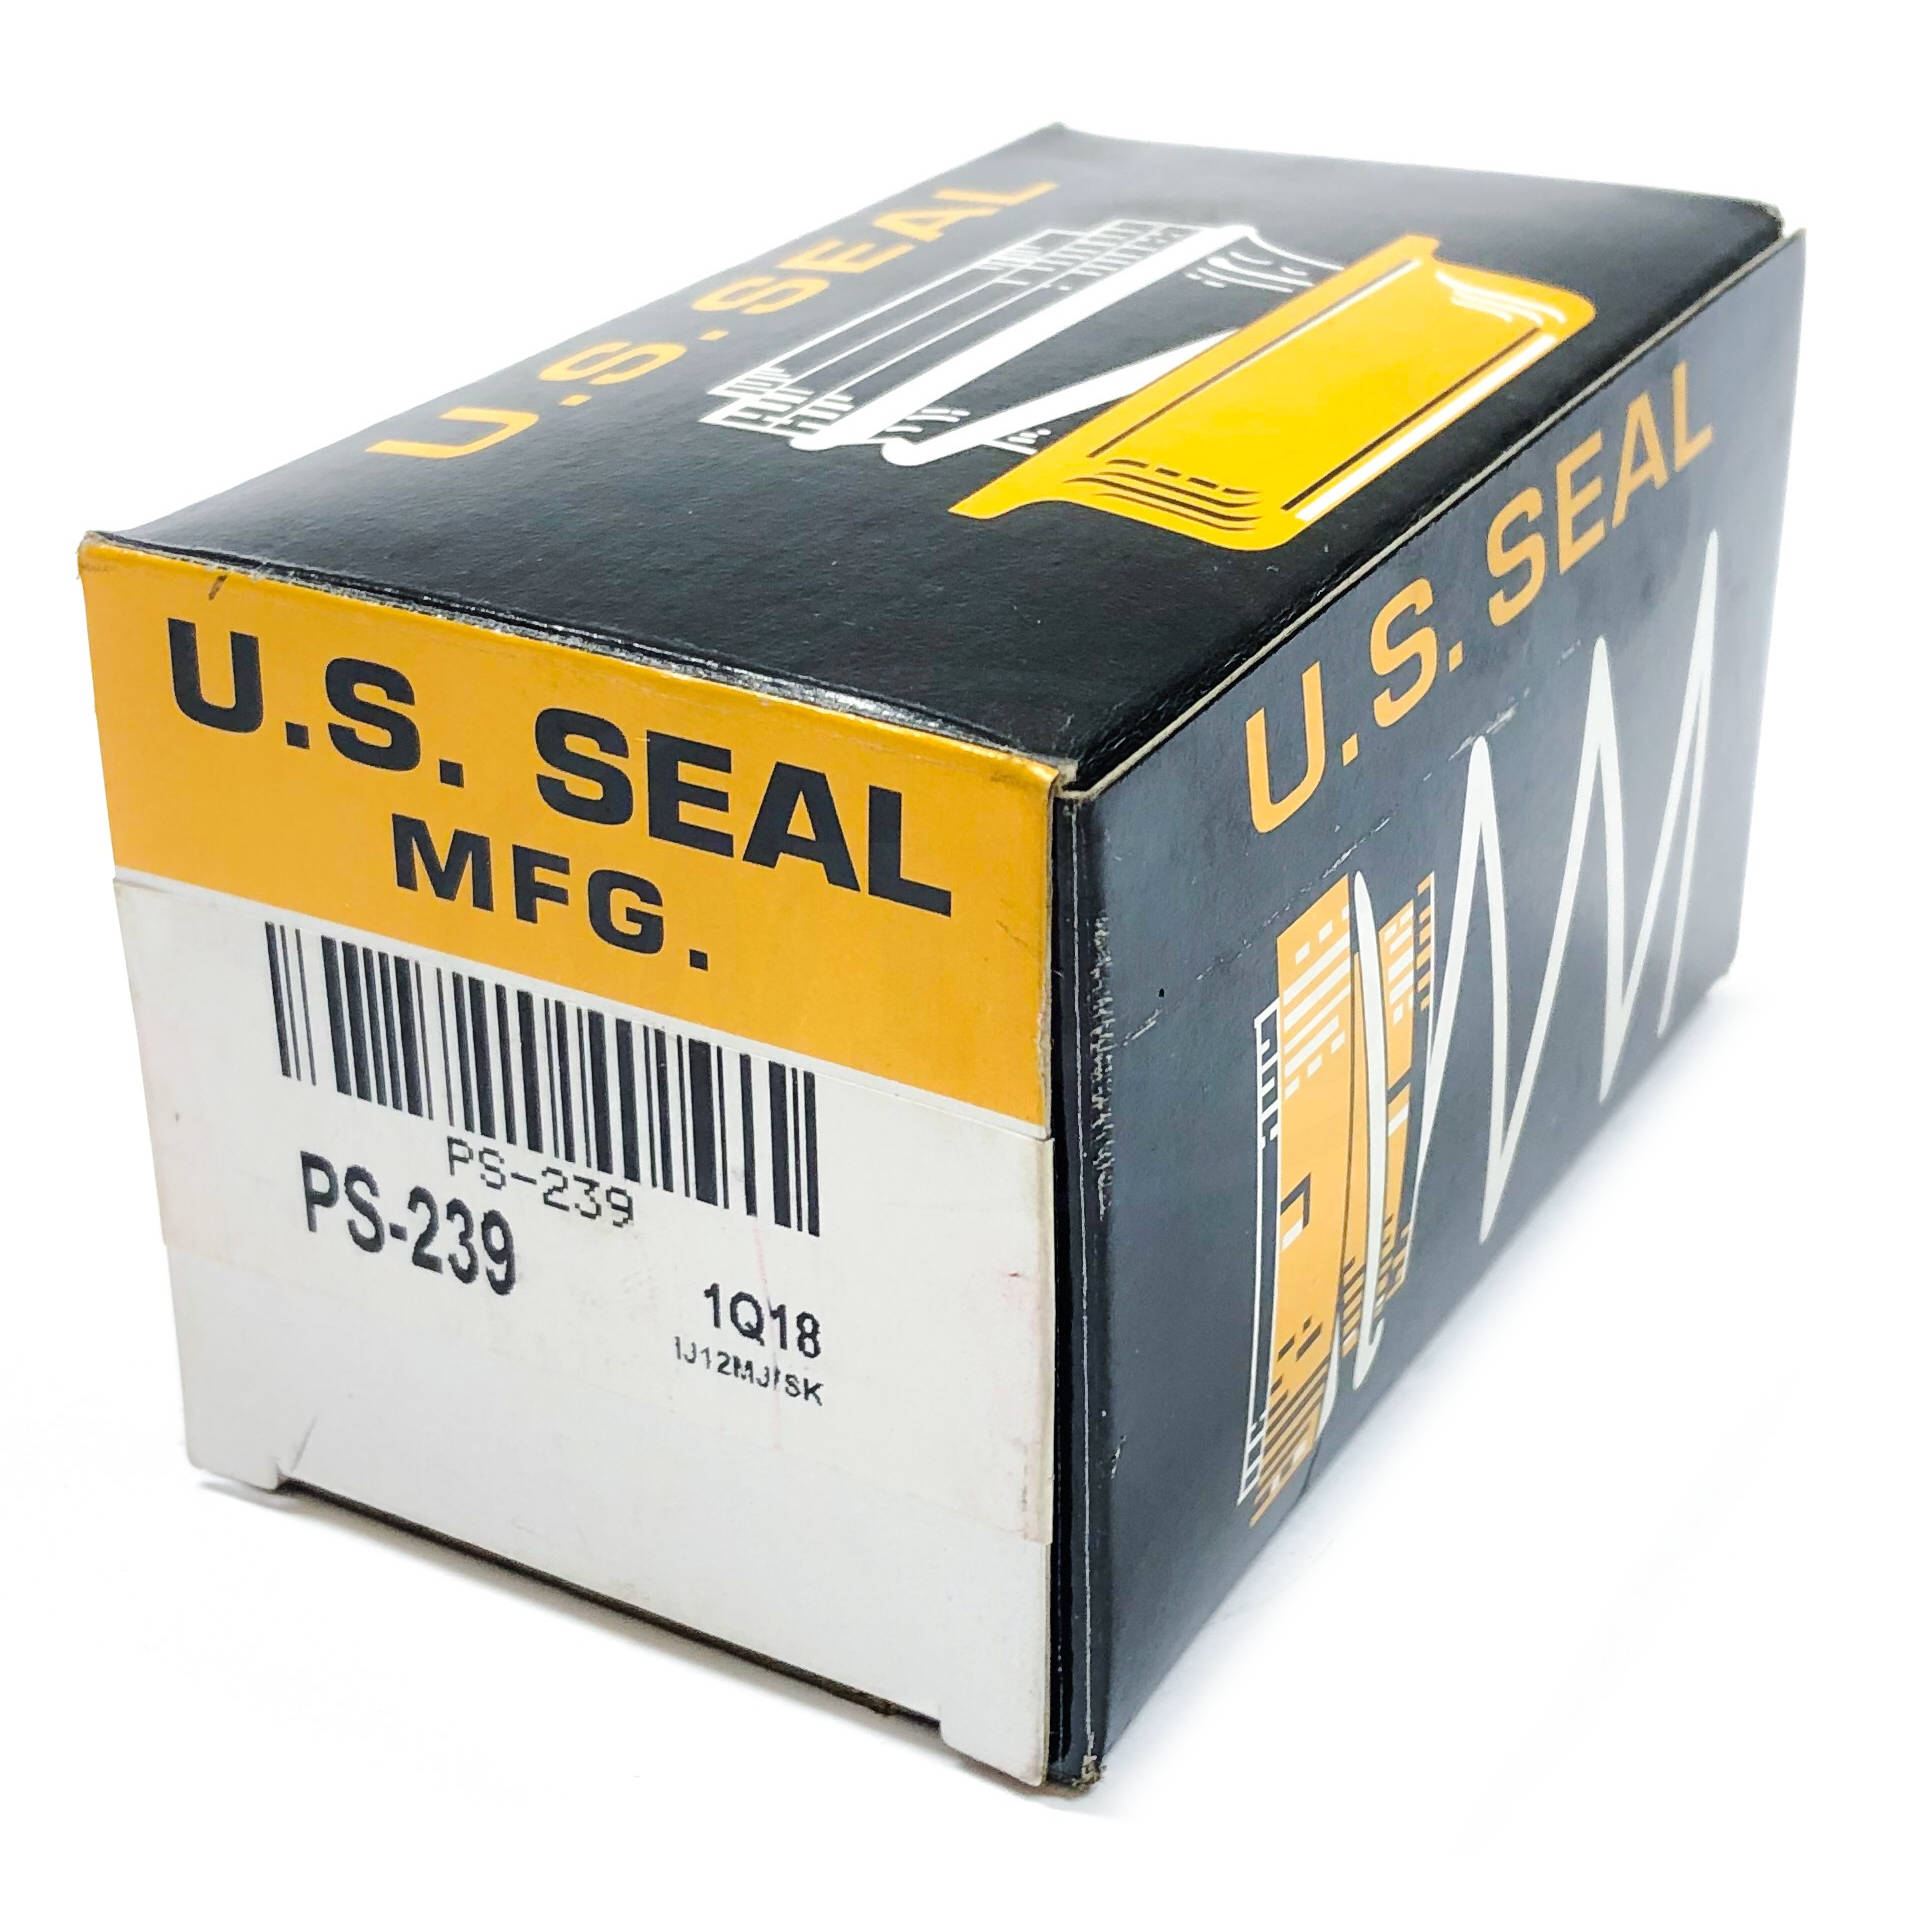 PS-239 U.S. Seal Mfg 1-5/8' Pump Seal 4